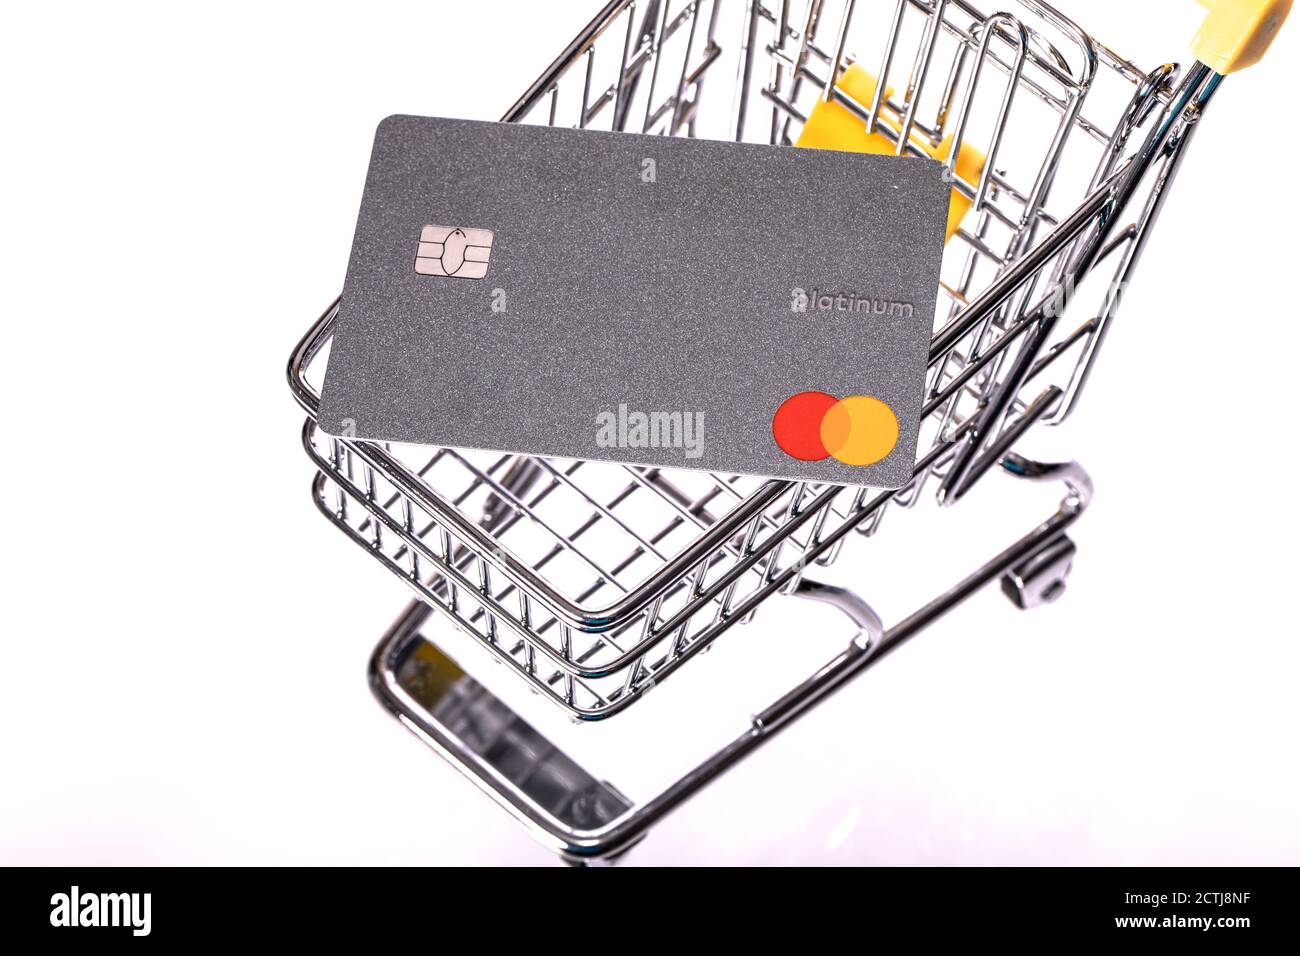 NY, USA - 25. August 2020: Kreditkarte Mastercard Platinum auf dem Einkaufswagen Stockfoto